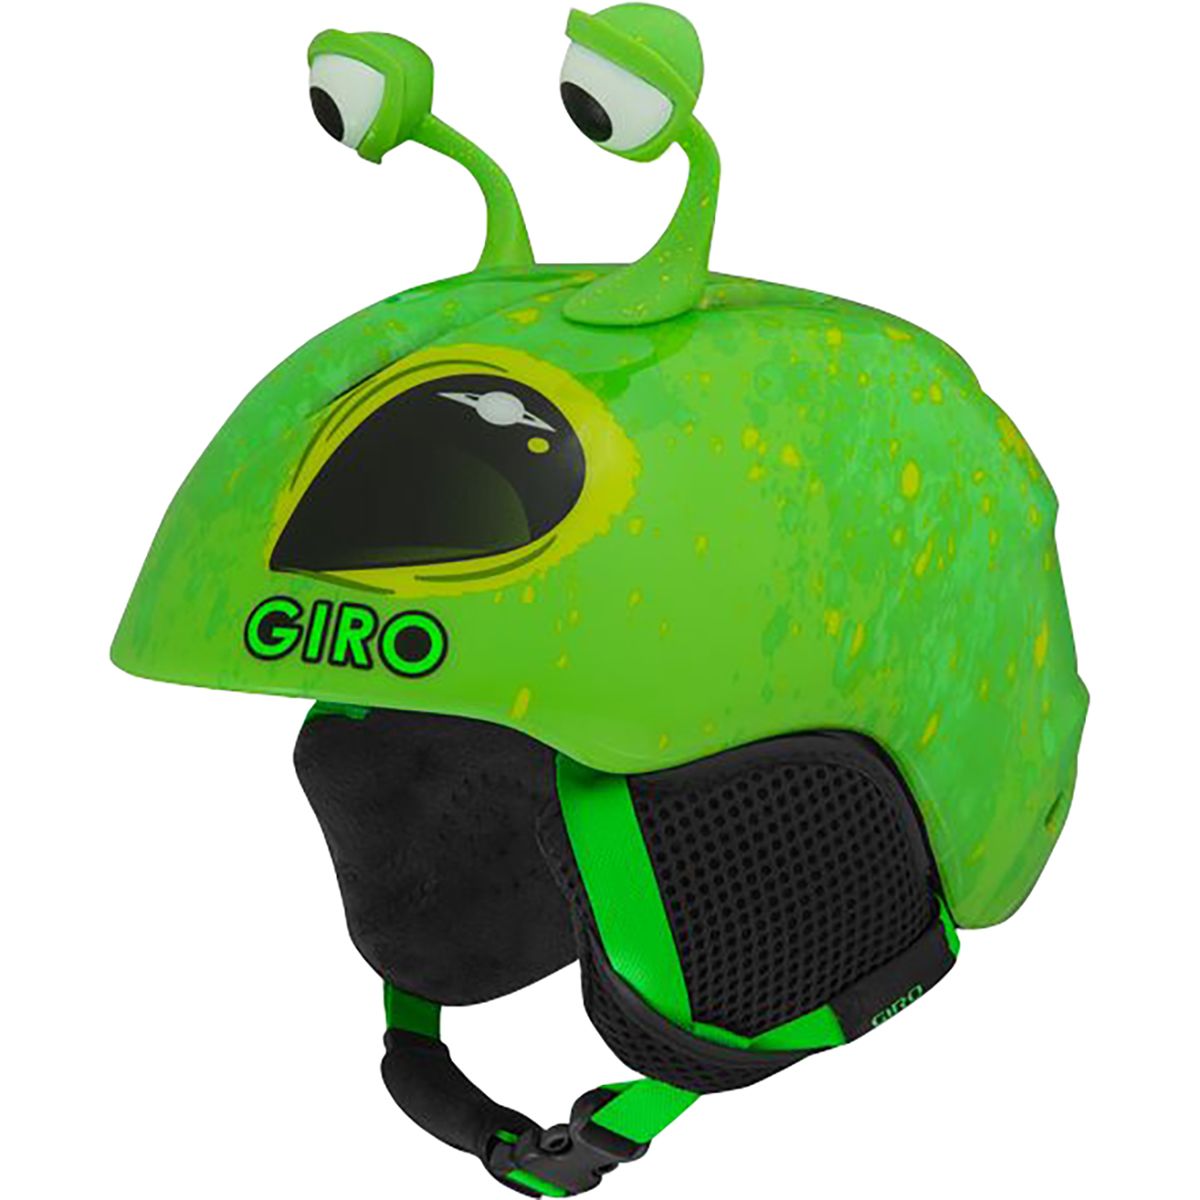 Giro Launch Plus Helmet - Kids' Bright Green Alien